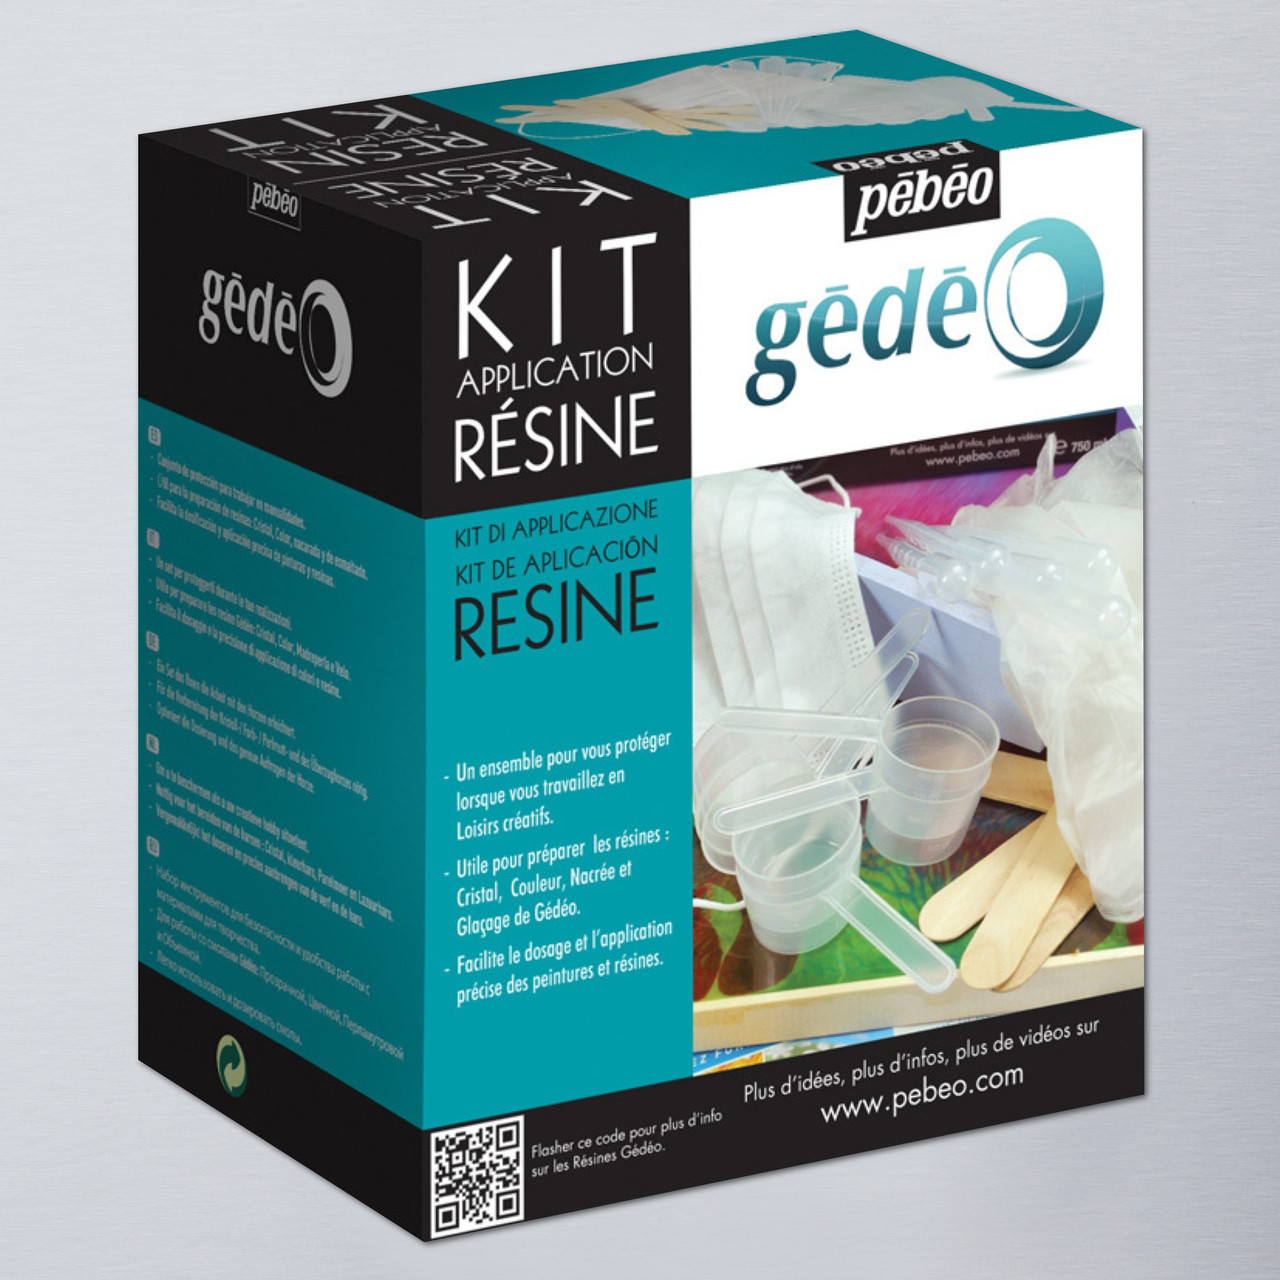 Pebeo Gedeo Resin Application Kit